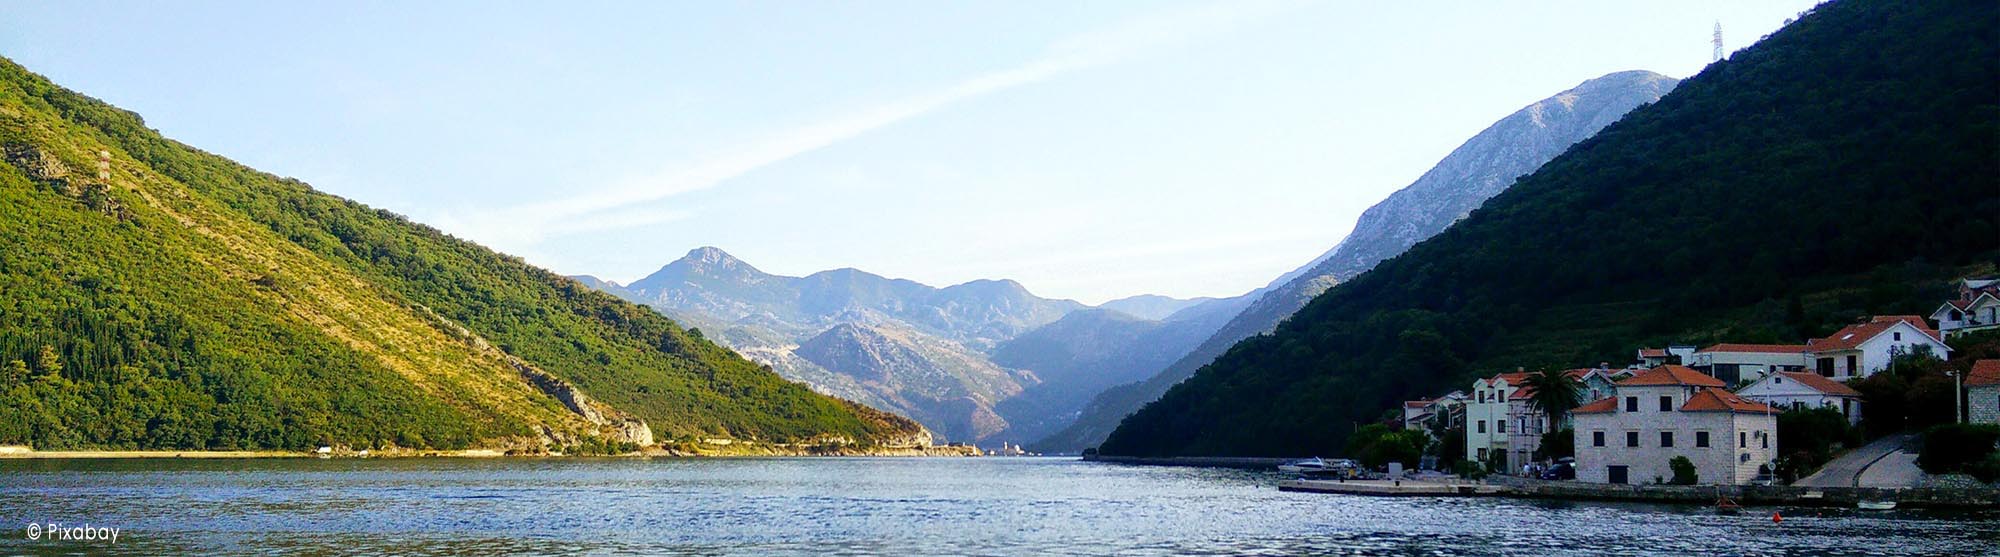 montenegro-mediterranee-kotor-oceans-voyages-entete